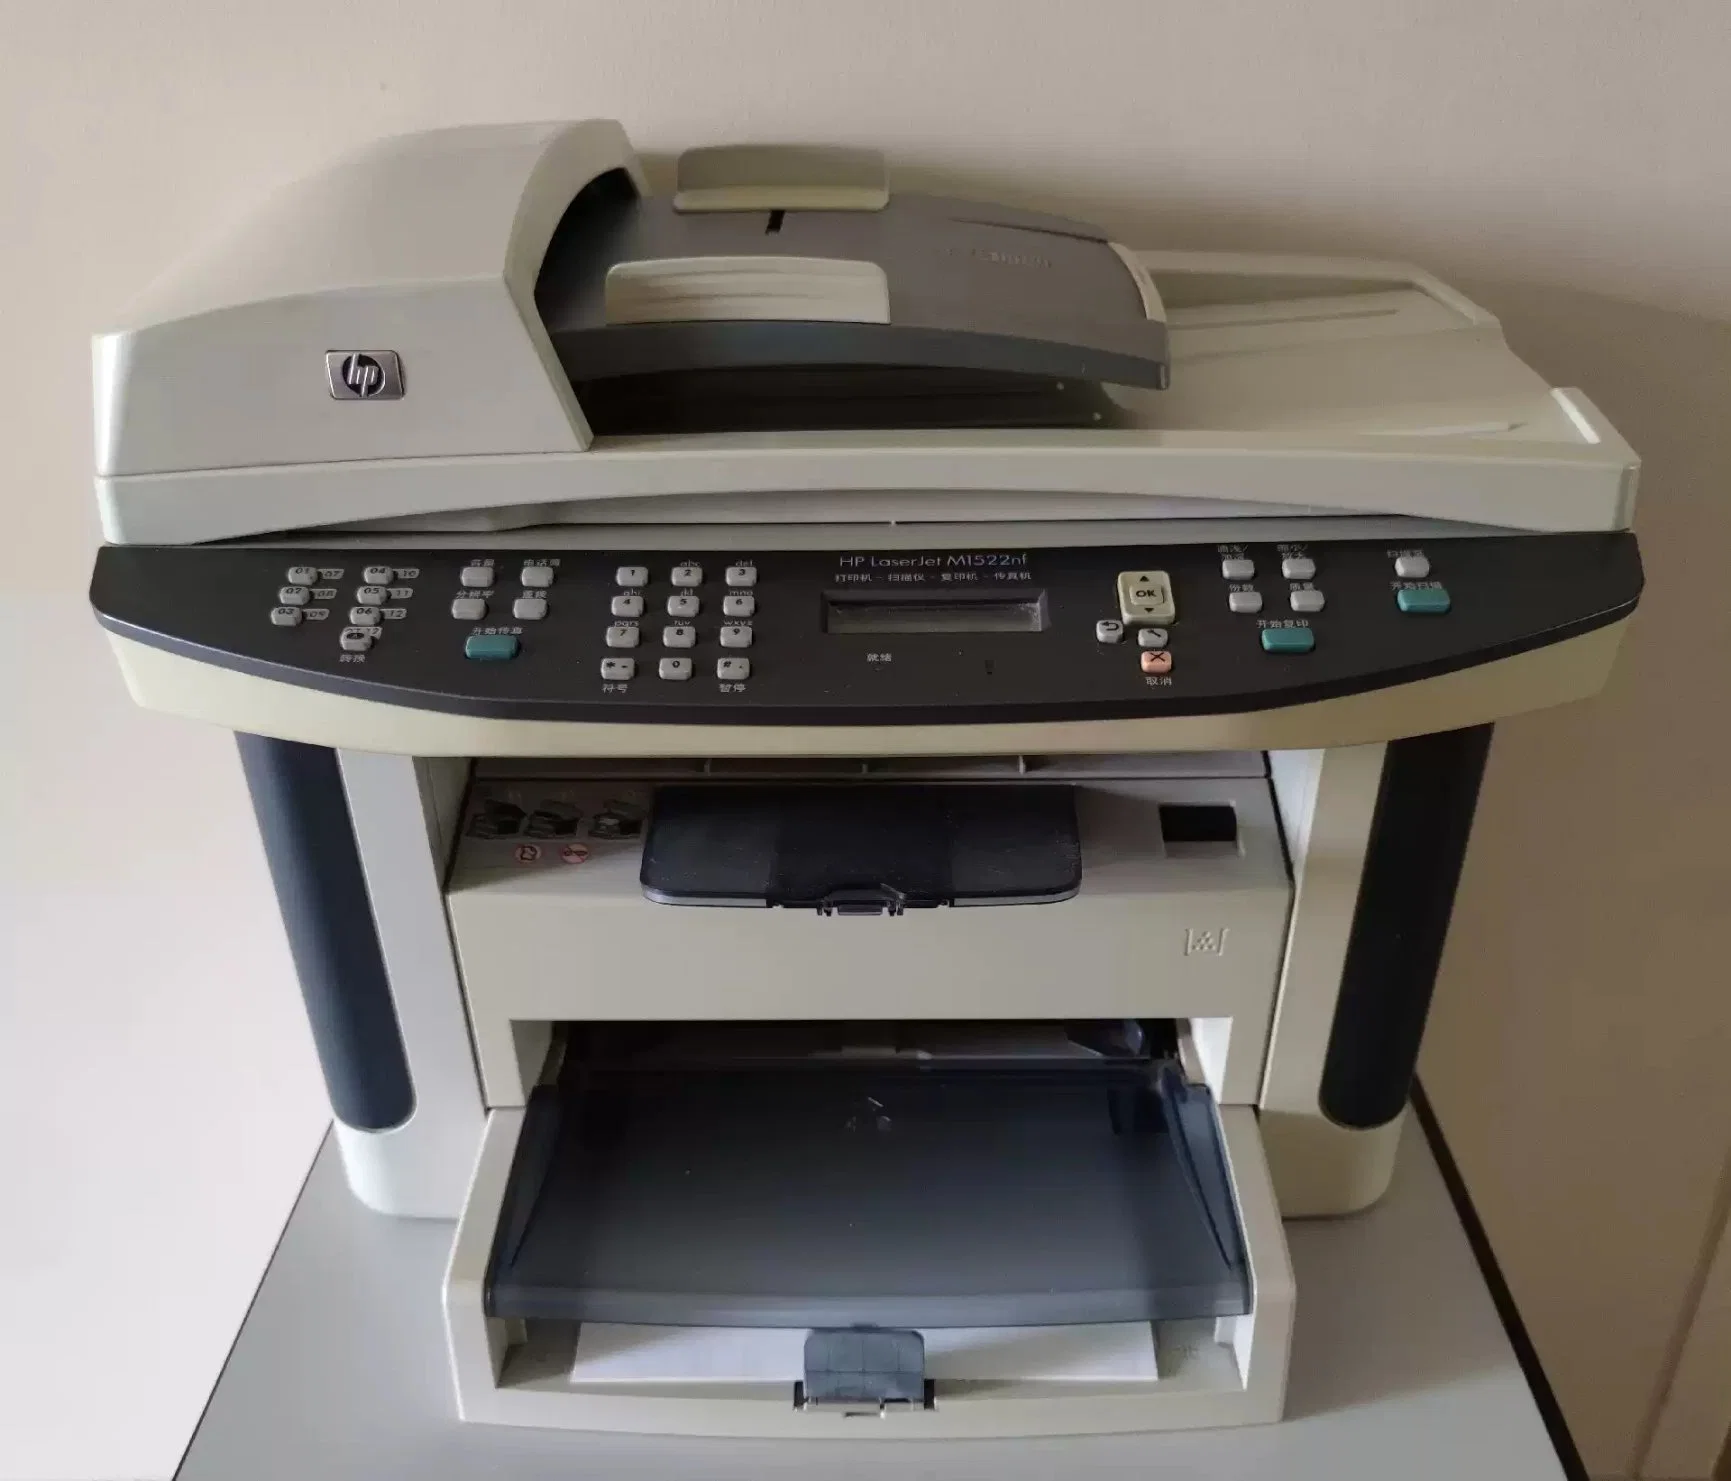 Secondhand HP M1522 Laser Printers for HP Laserjet M1522NF Multifunction Printer Machine Support Print Copy Scan Fax Used HP Laserjet M1522NF Printer